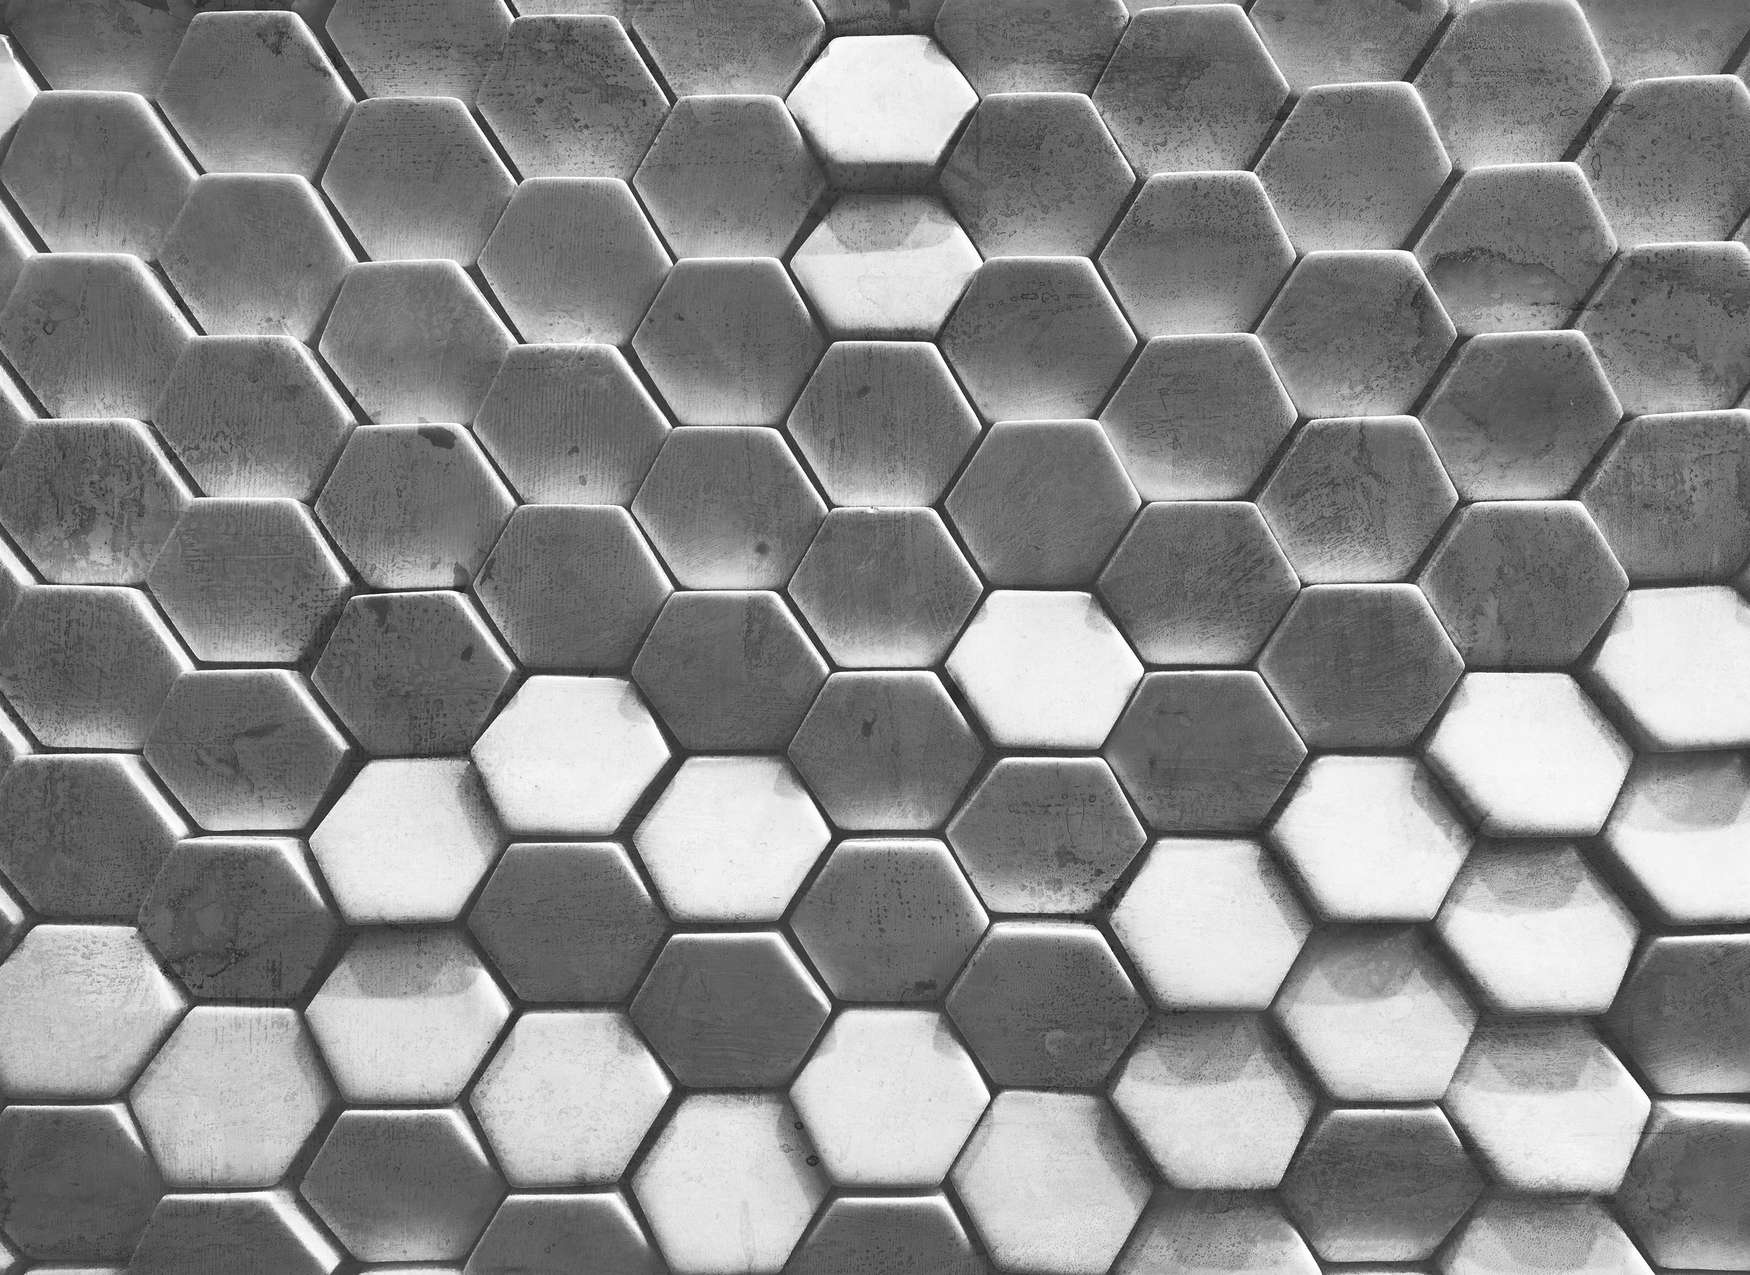             3D Wallpaper with Metallic Pattern - Grey, White
        